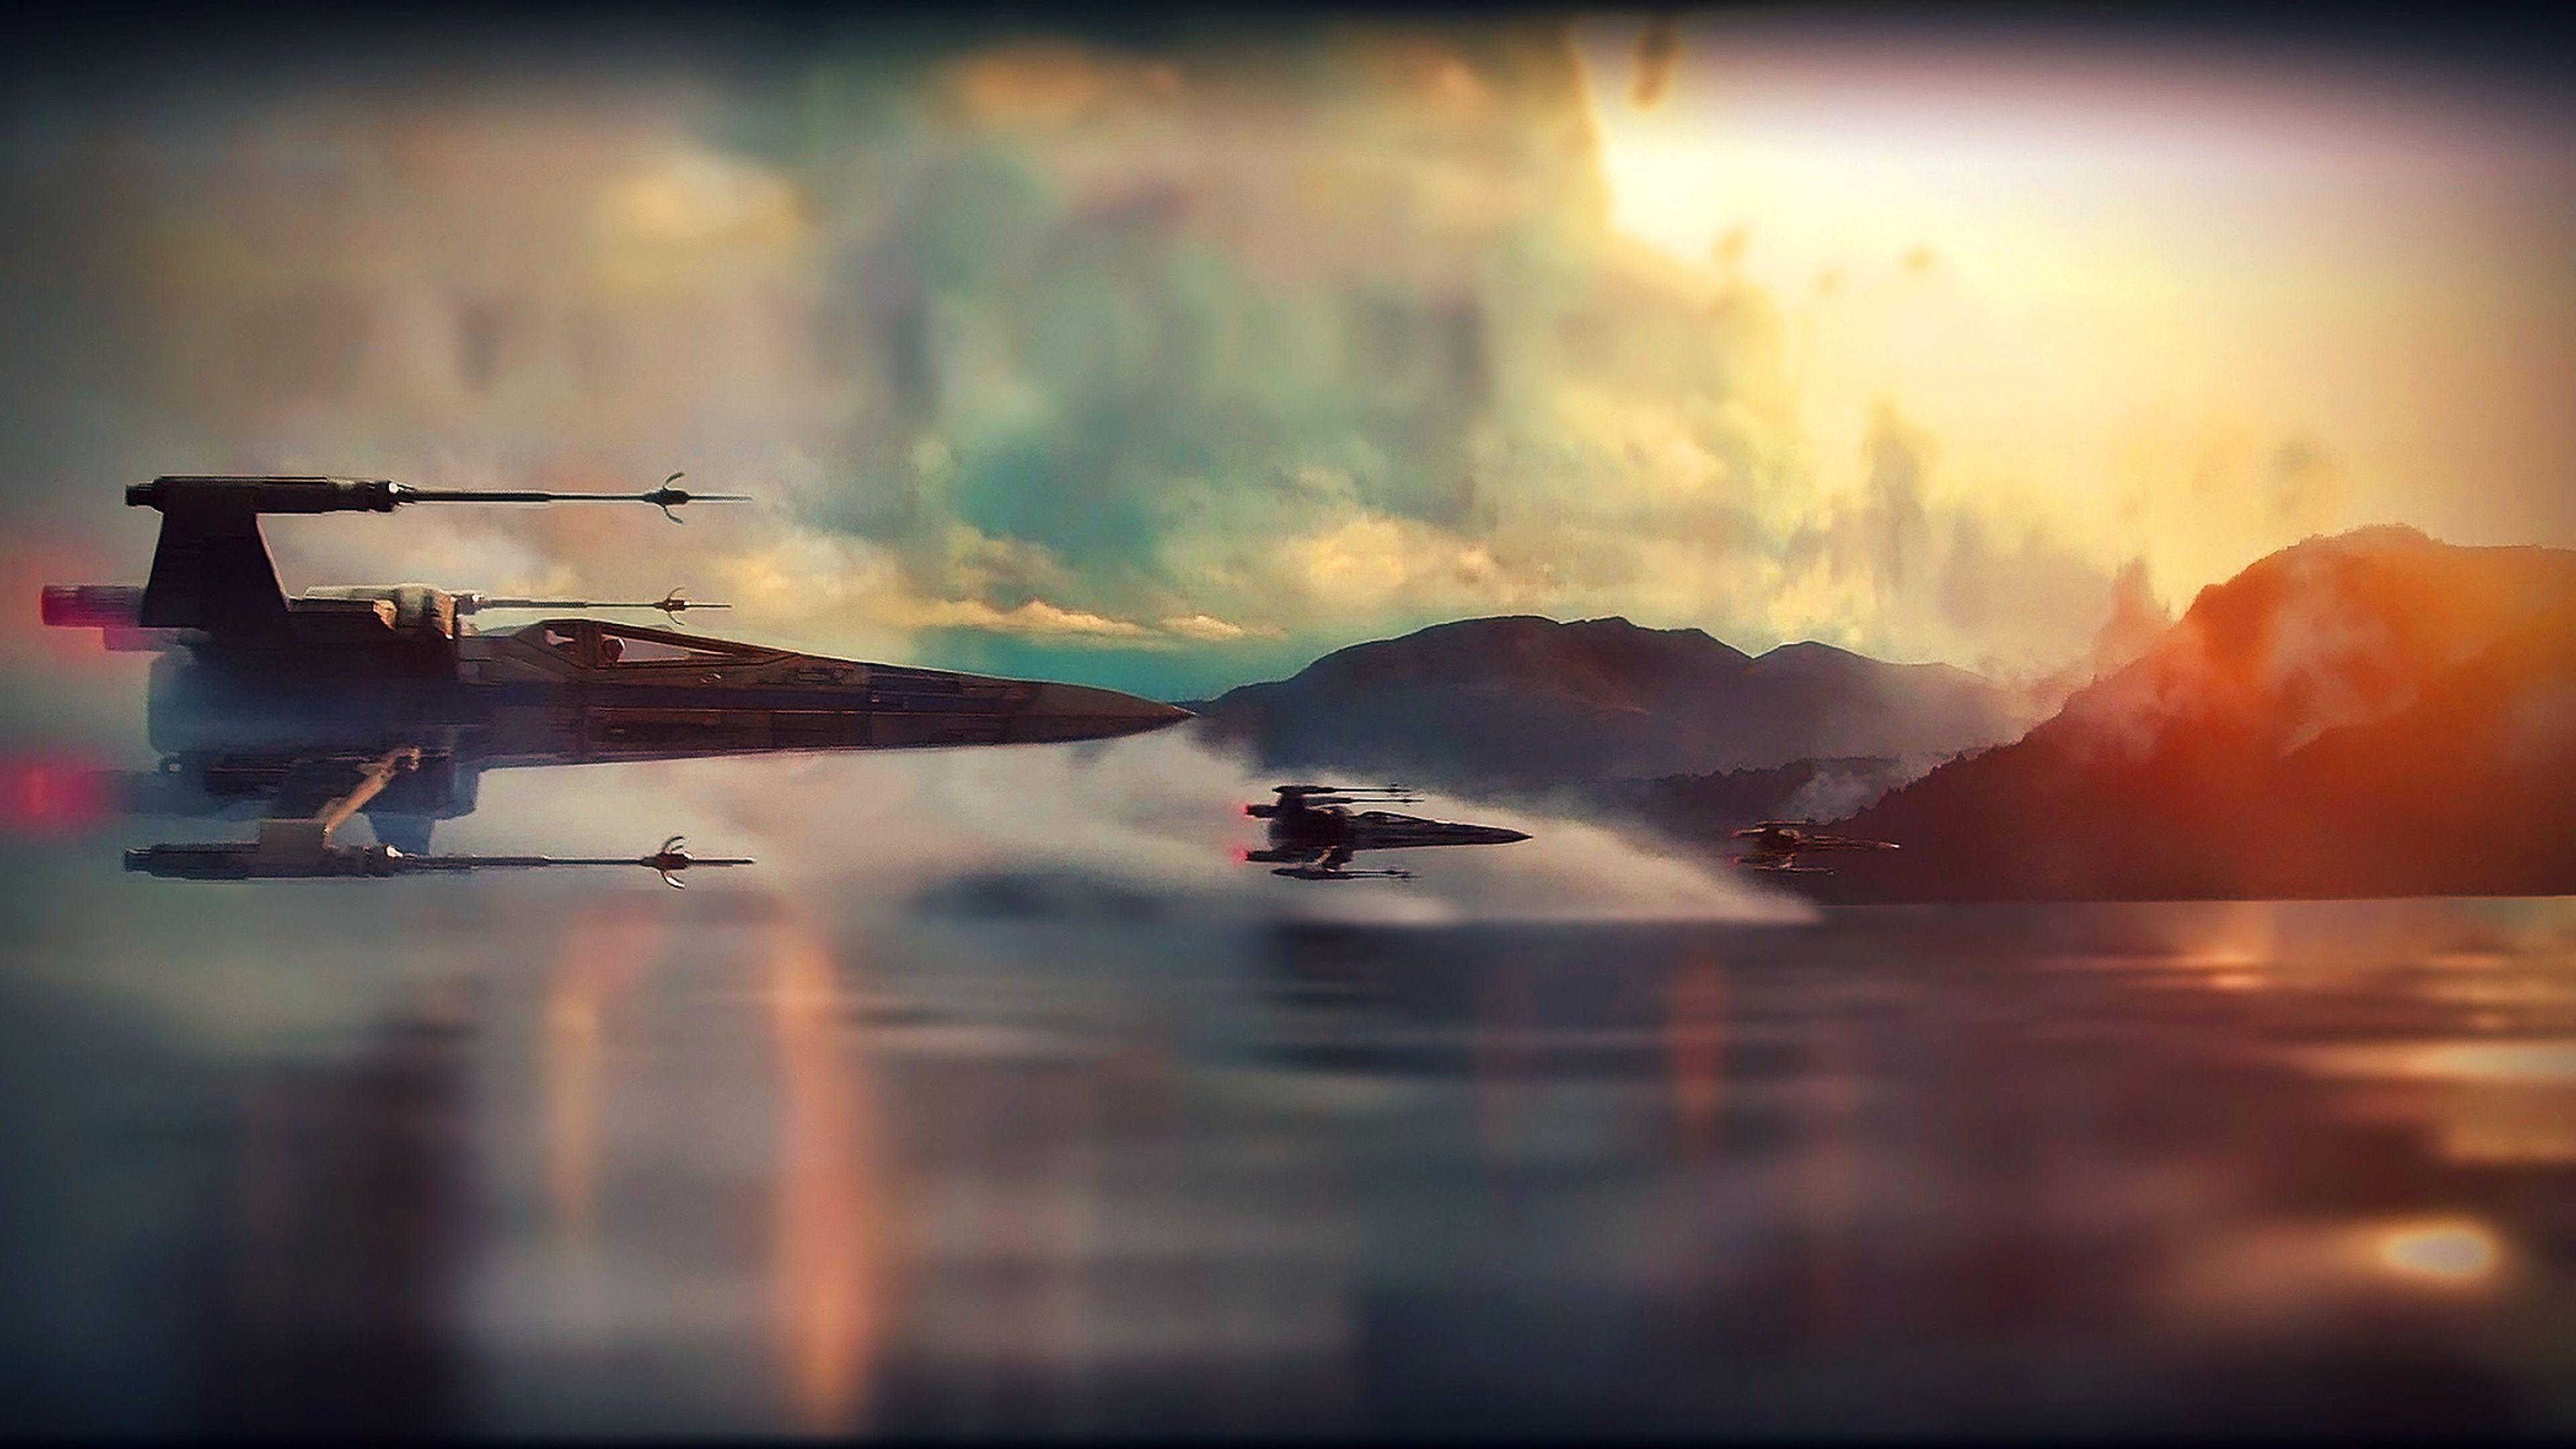 Star Wars Landscape Wallpapers - Top Free Star Wars Landscape